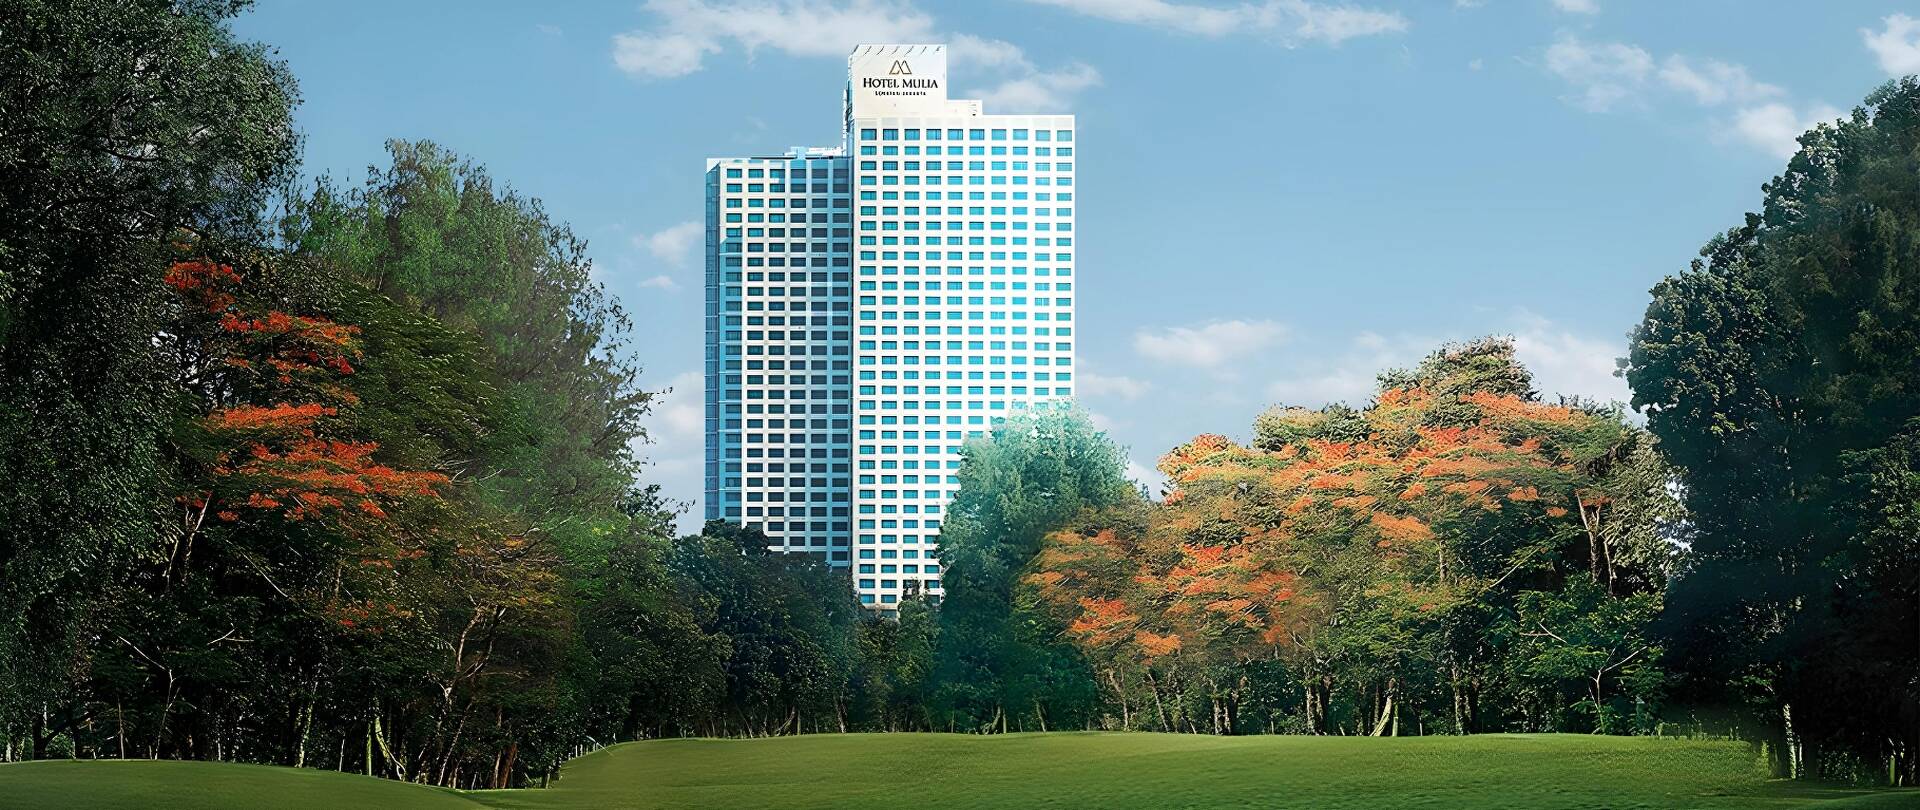  Tour & Gallery | Hotel Mulia Senayan, Jakarta